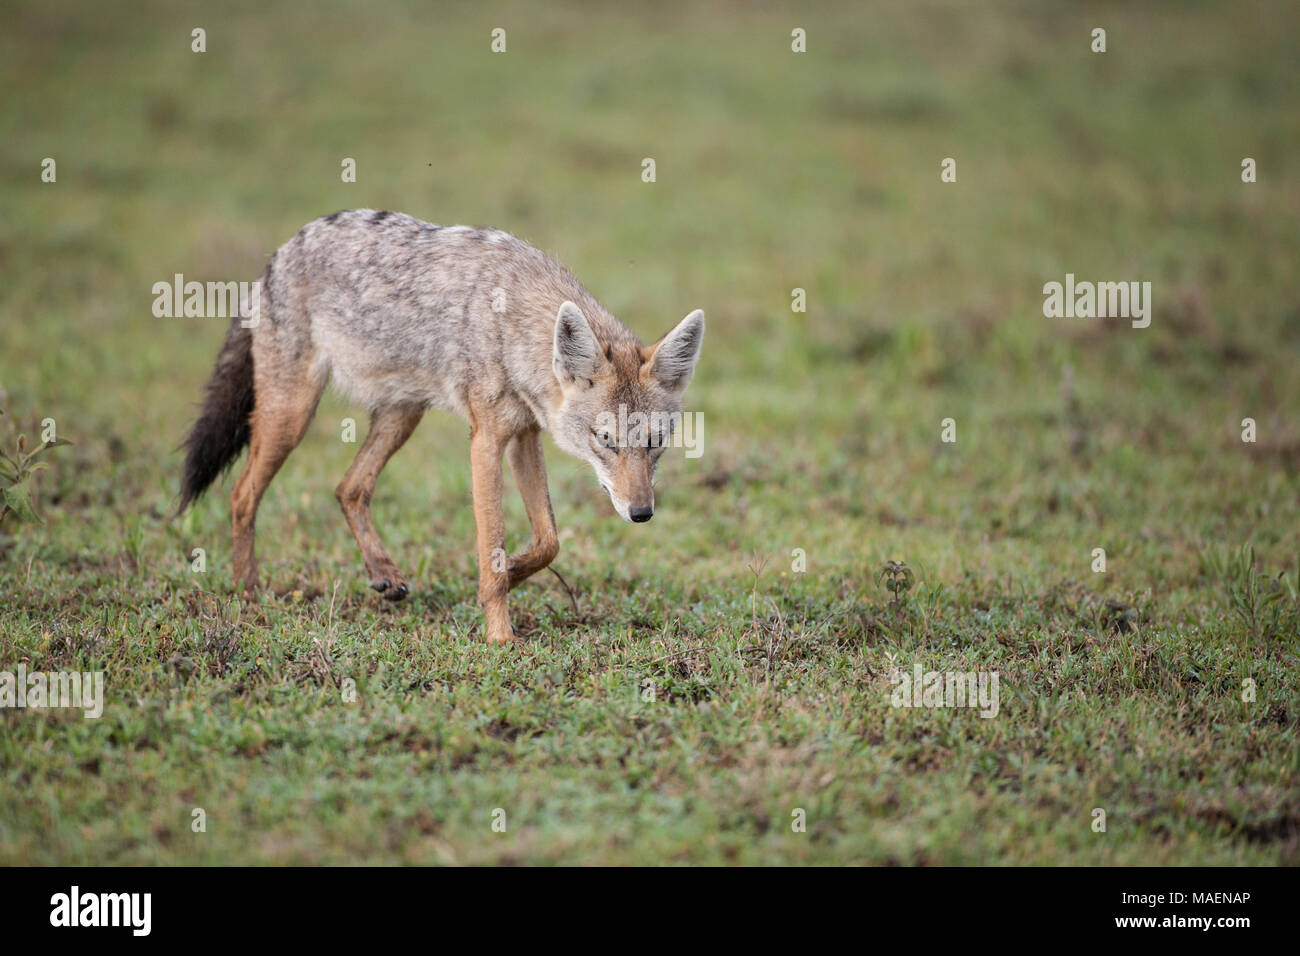 Golden jackal or Common jackal  Canis aureus prowling the open grassland in Tanzania Stock Photo